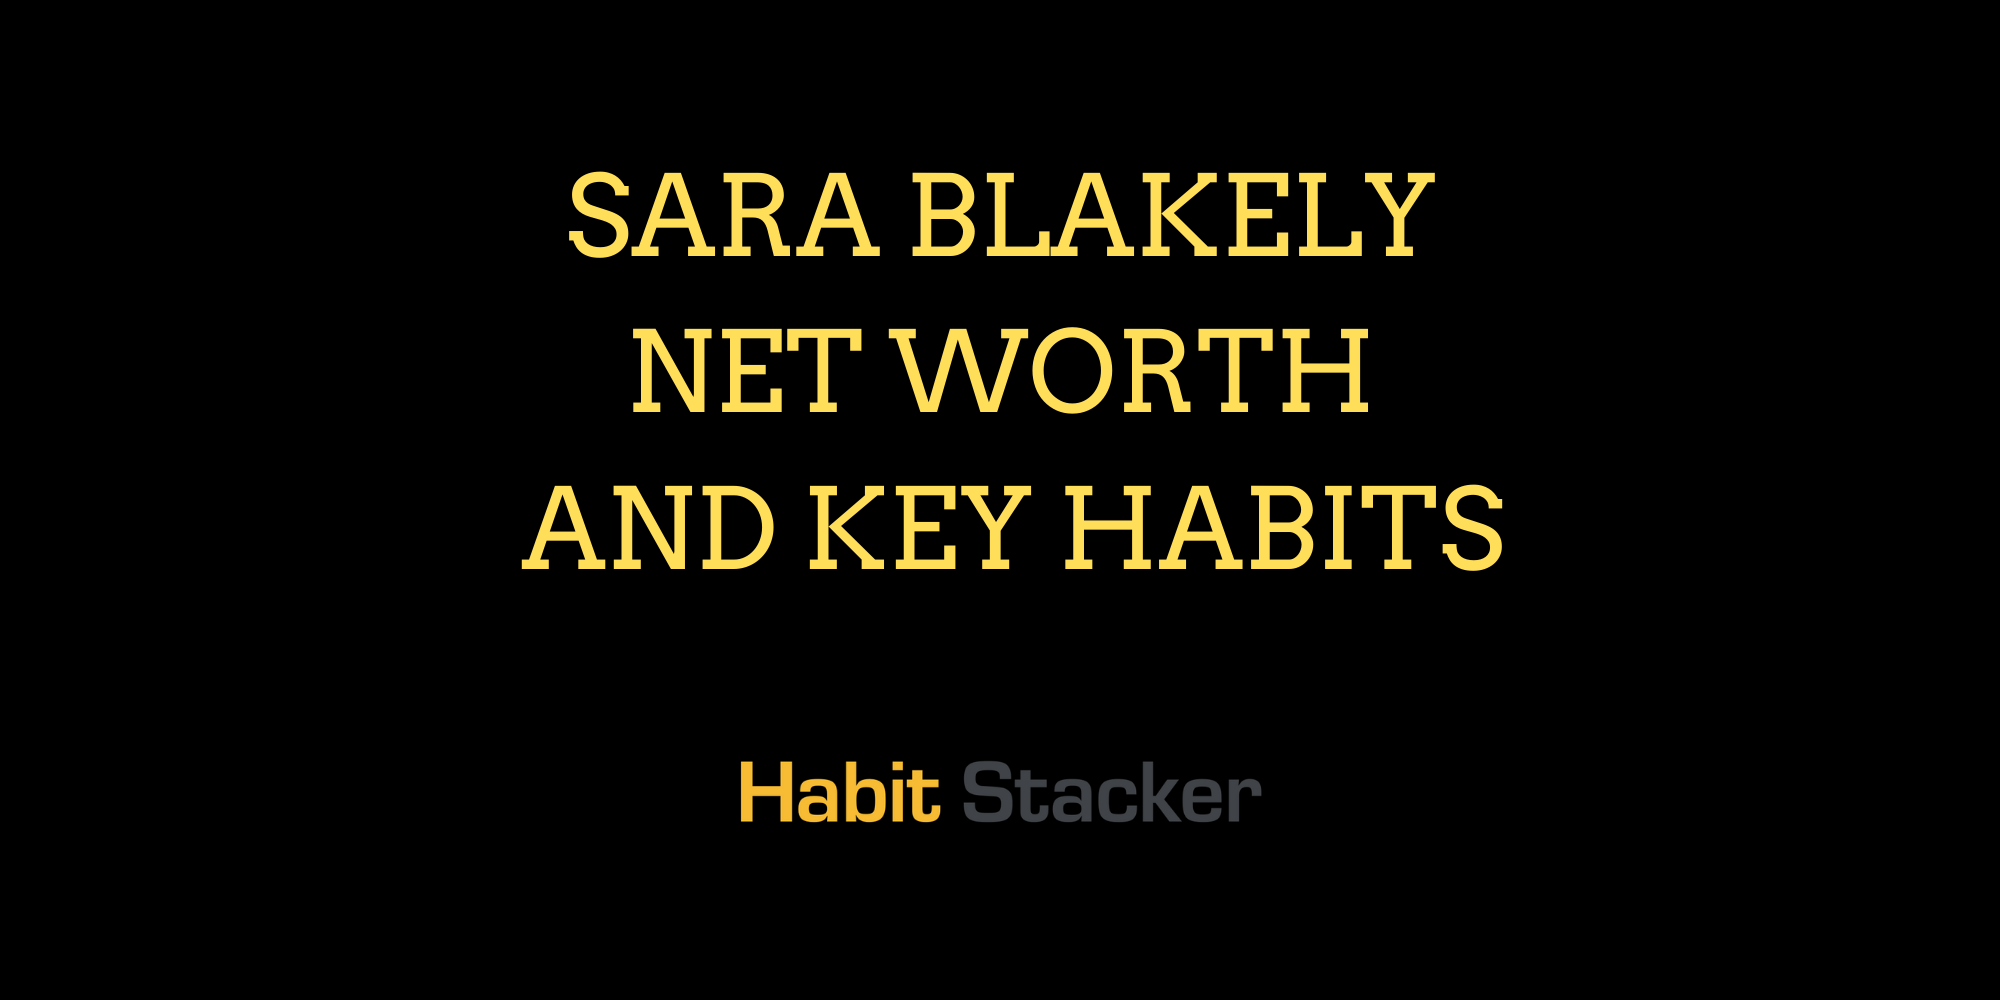 Sara Blakely Net Worth and Key Habits